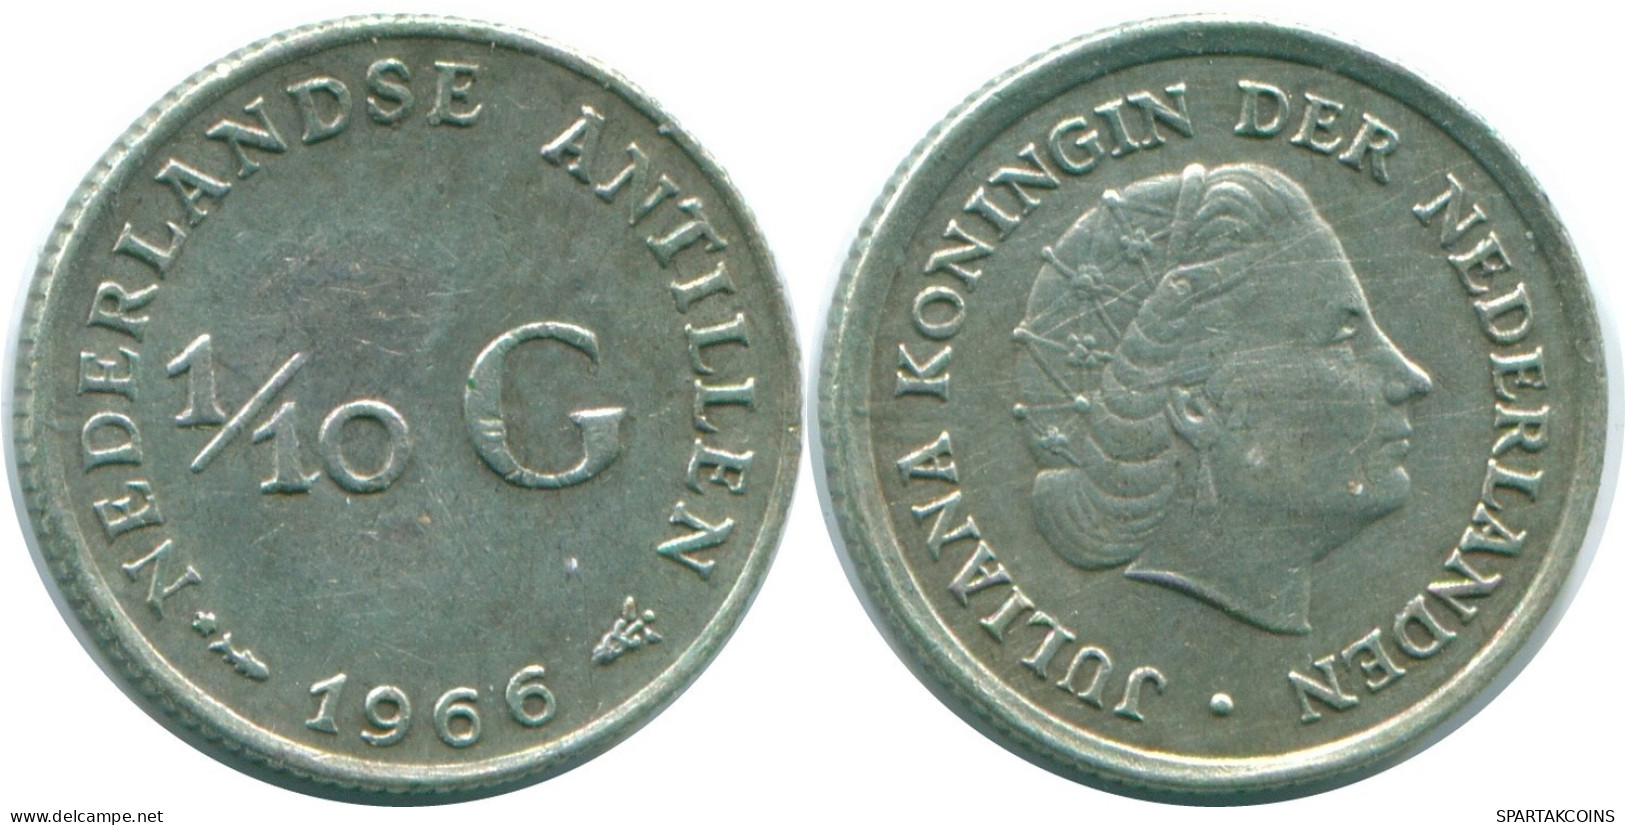 1/10 GULDEN 1966 NETHERLANDS ANTILLES SILVER Colonial Coin #NL12937.3.U.A - Netherlands Antilles